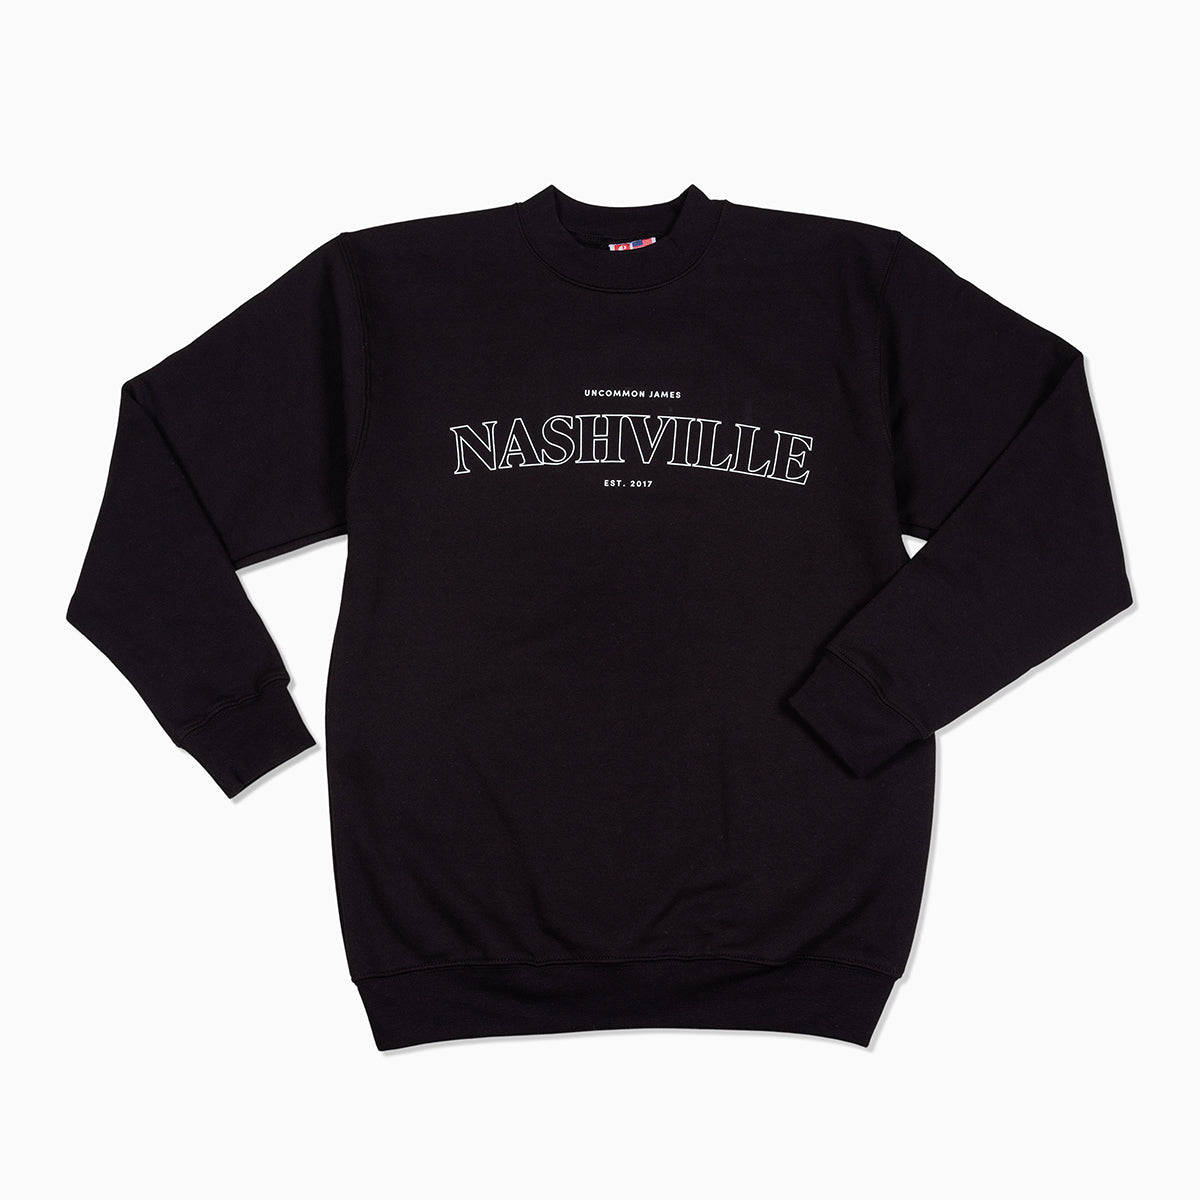 Nashville Sweatshirt | Black | Product Image | Uncommon James